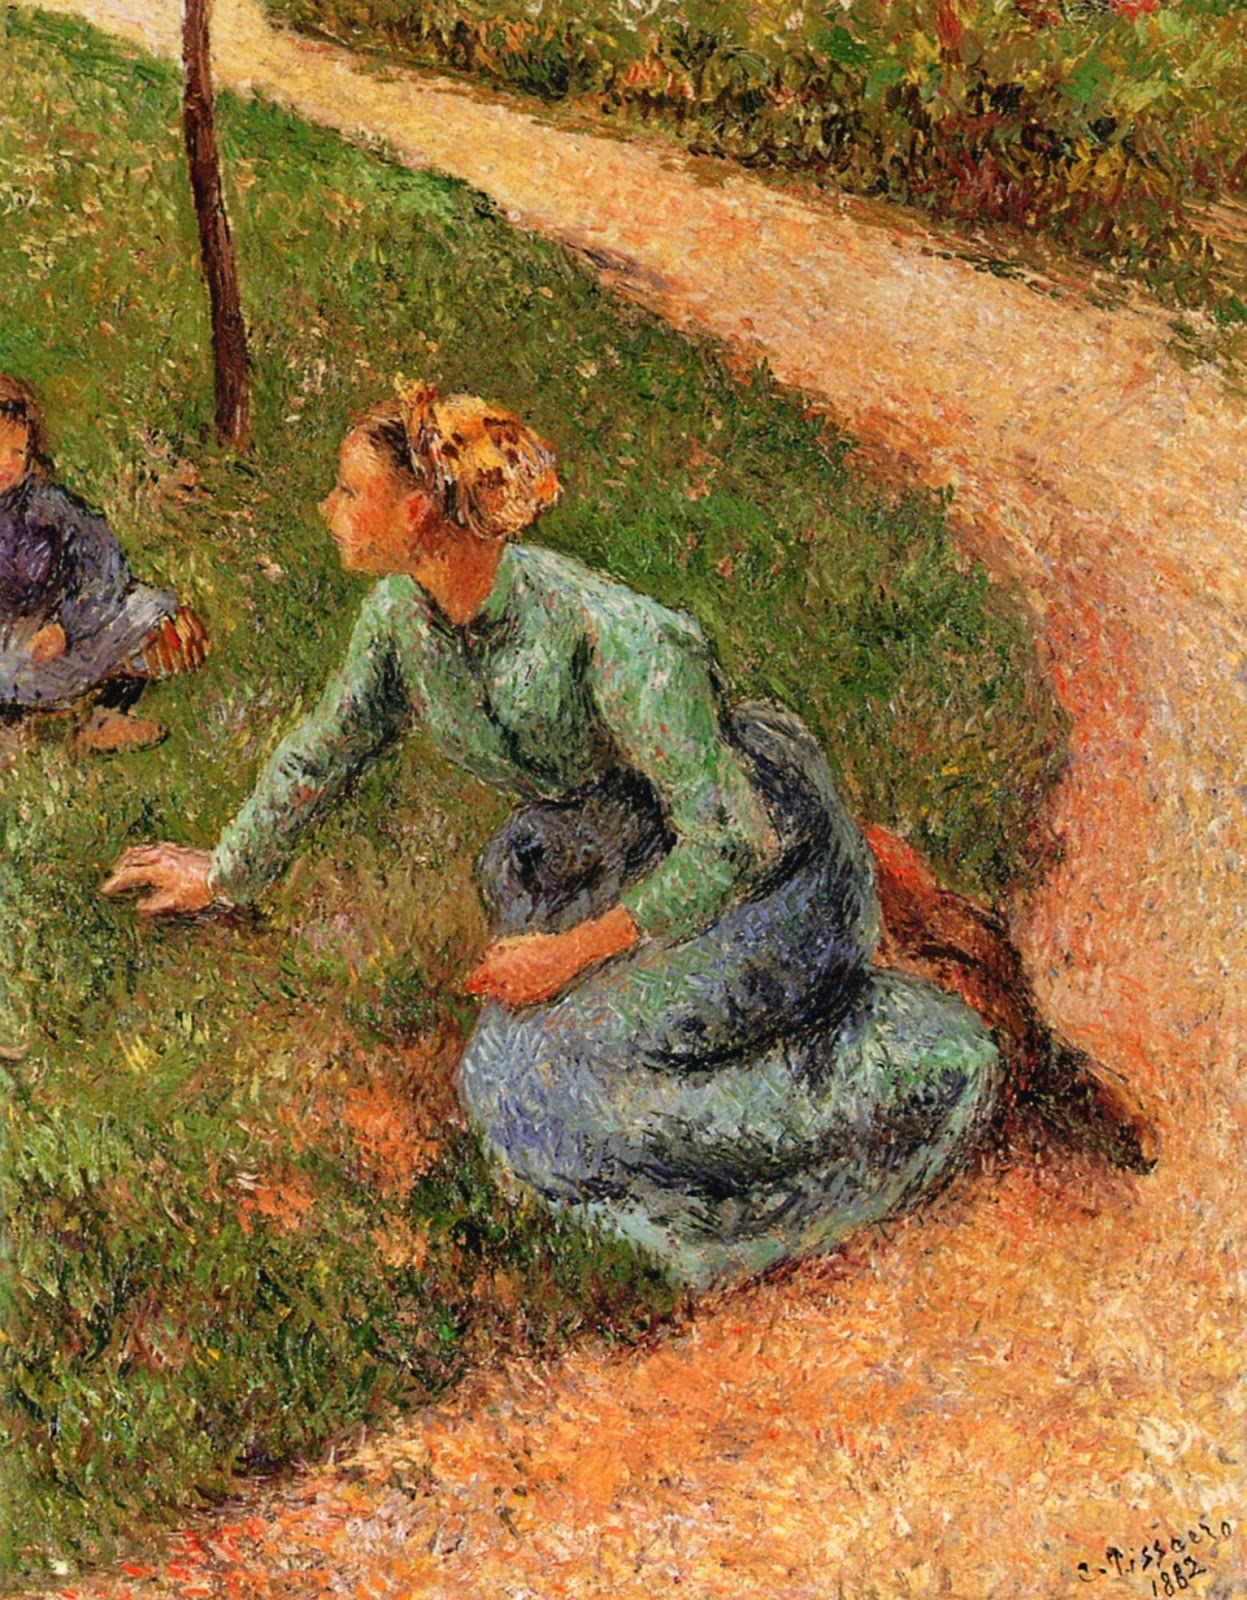 Camille+Pissarro-1830-1903 (319).jpg